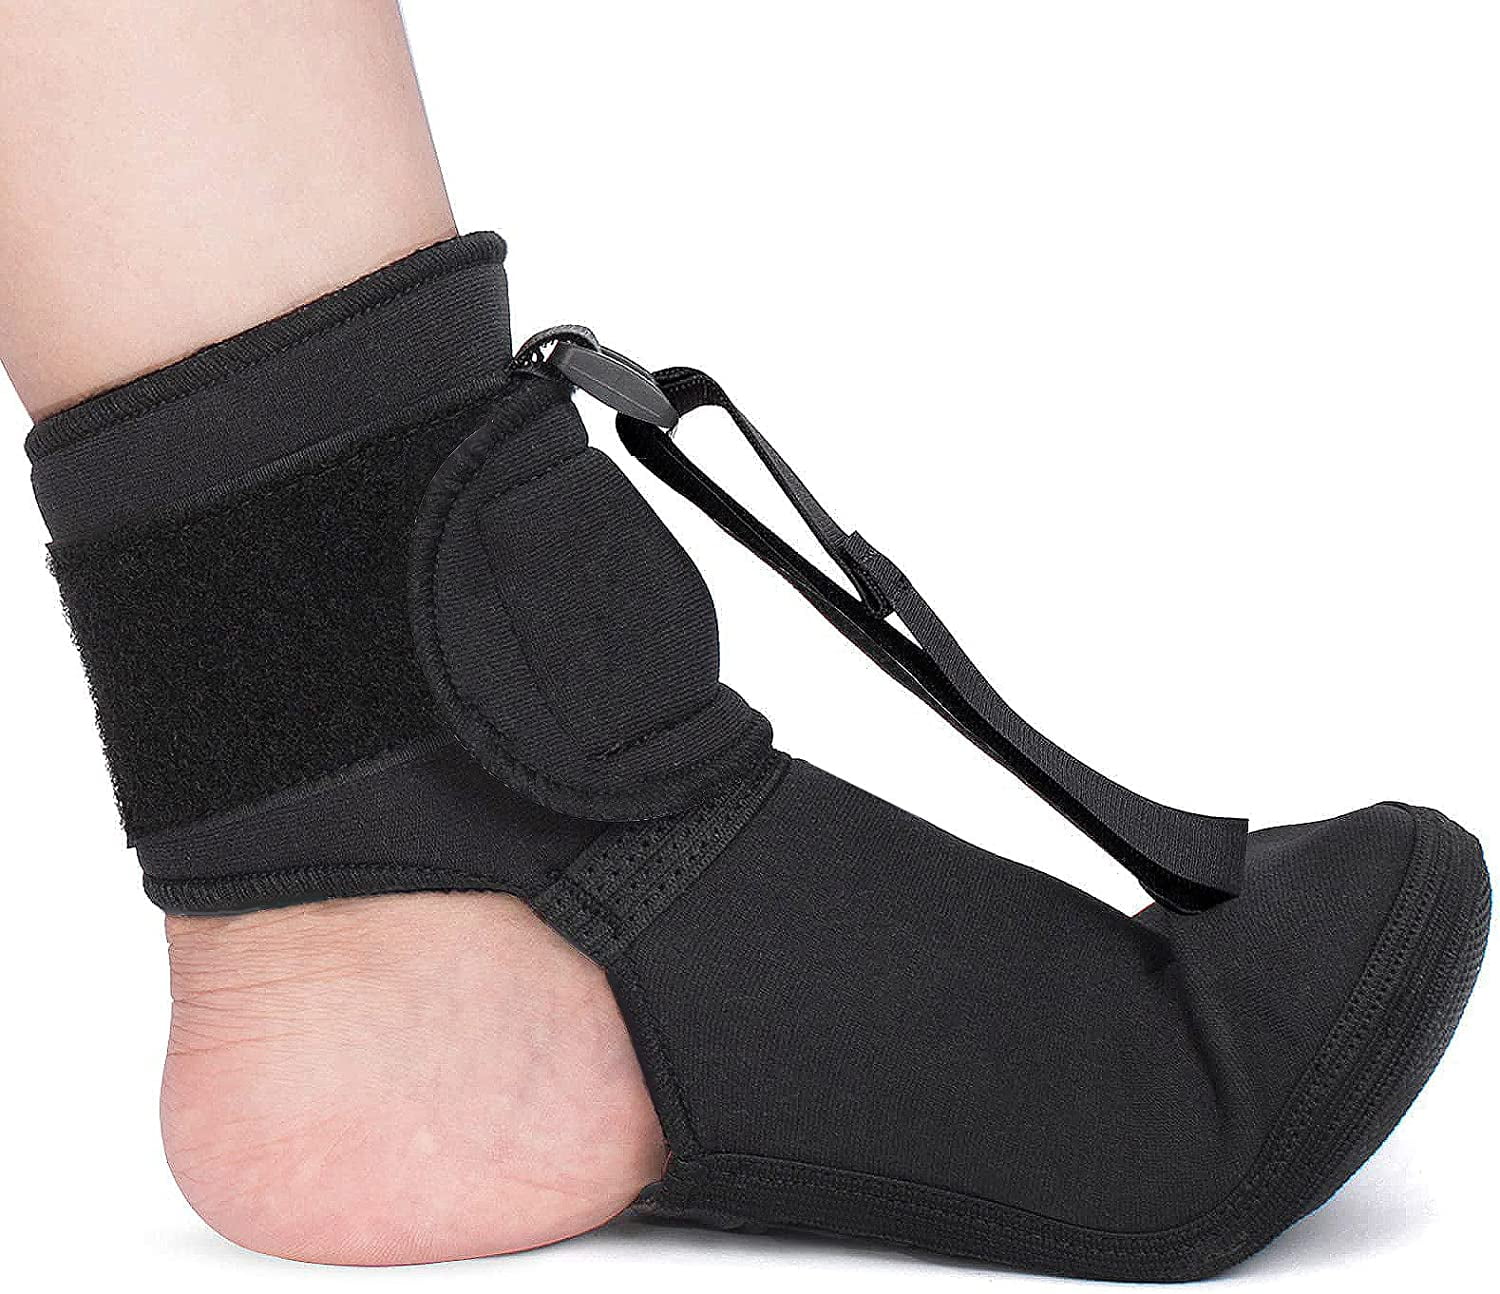 3Pairs Neuropathy Socks Ankle Compression Sleeve For Swelling, Plantar  Fasciitis, Sprain, Neuropathy - Nano Brace For Women & Men (S,Gray) 